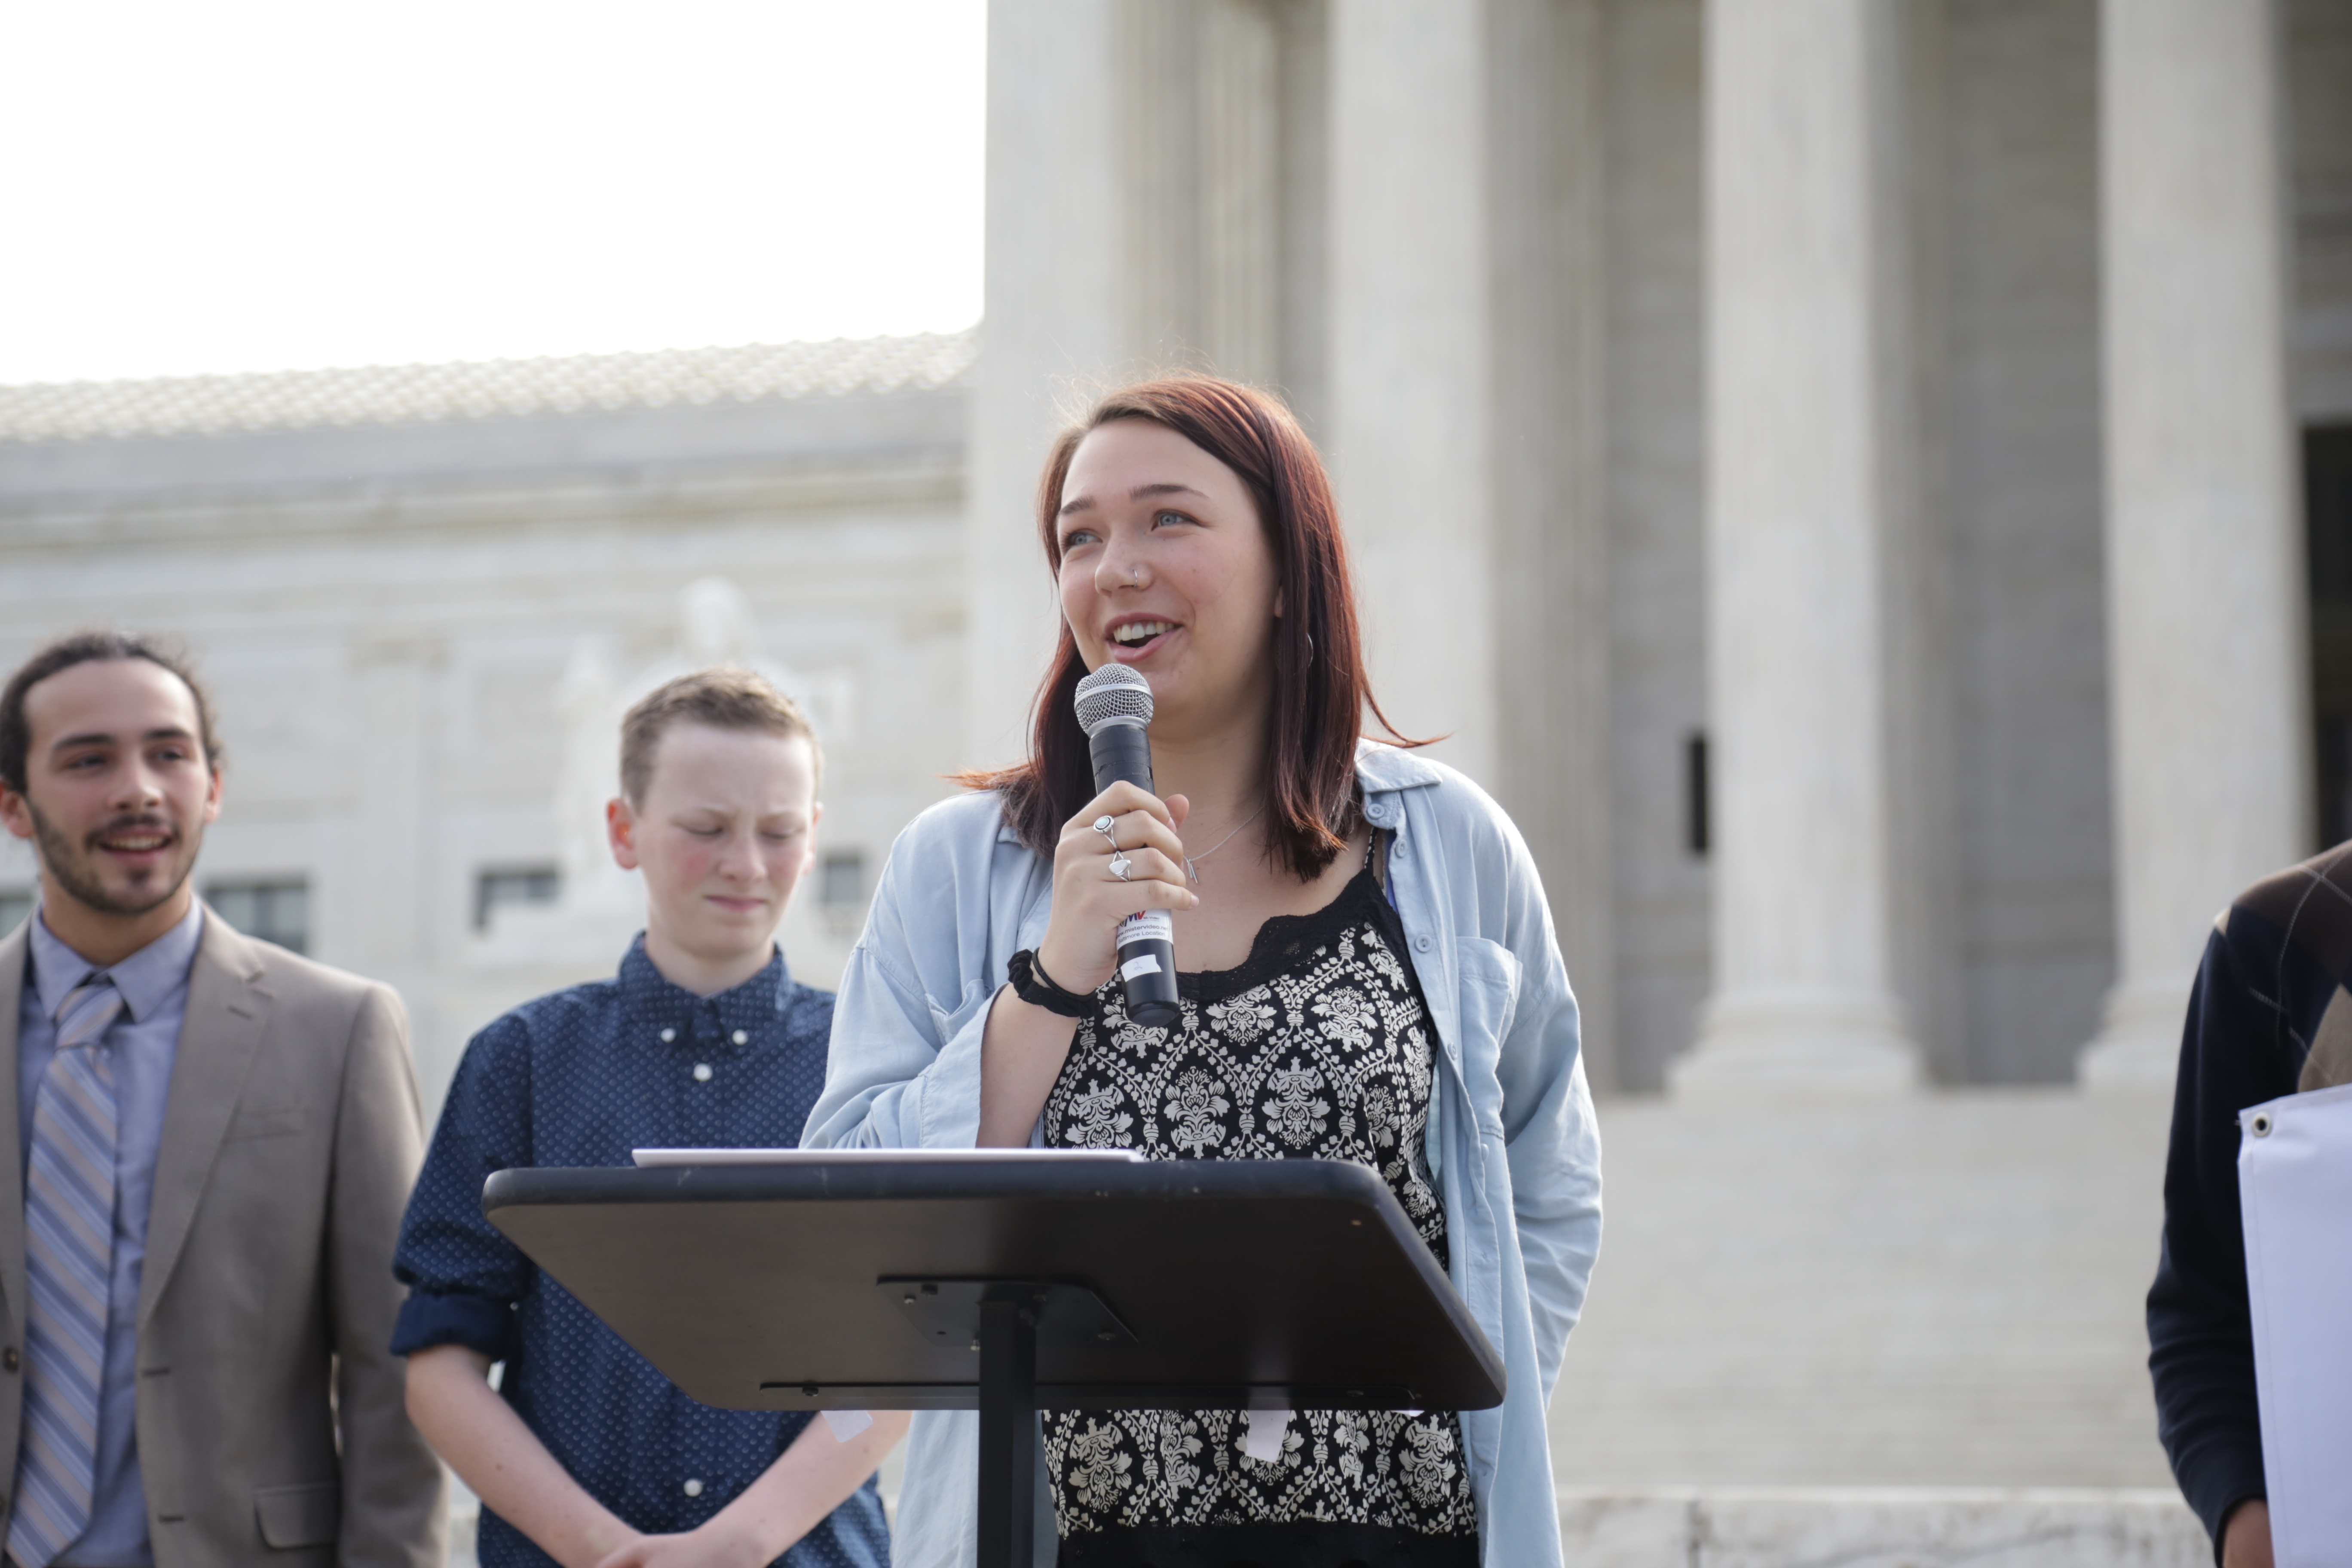 Lead plaintiff Kelsey Juliana (21) speaks in front of the Supreme Court on April 27, 2017. (Photo by John Light)